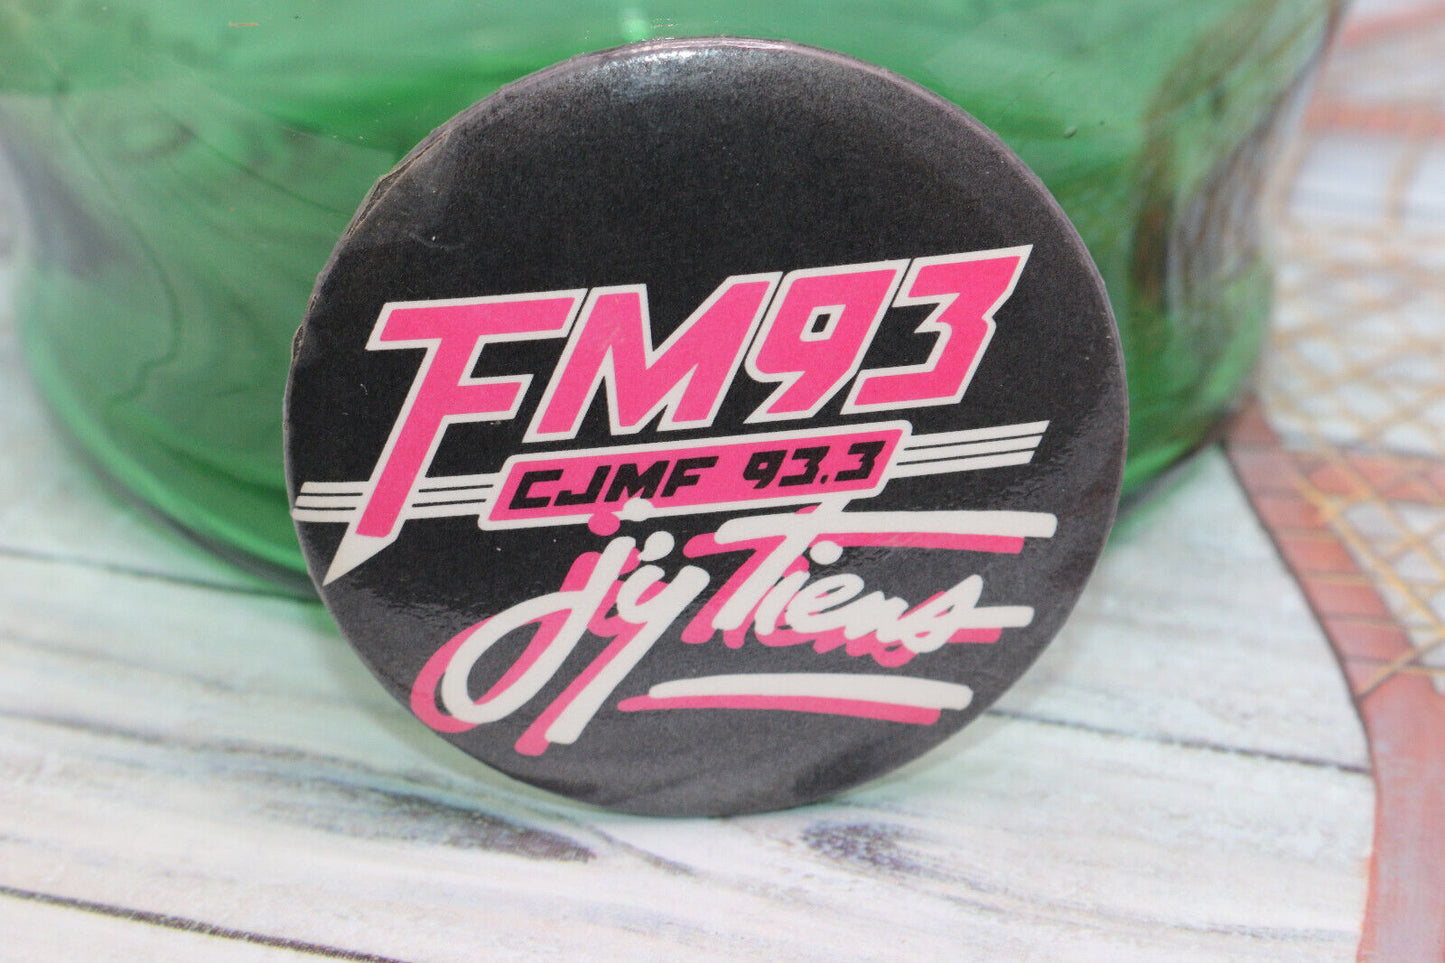 Vintage Radio Fm 93 Cjmf 93.3 J'Y Tiens Buttom Pinback